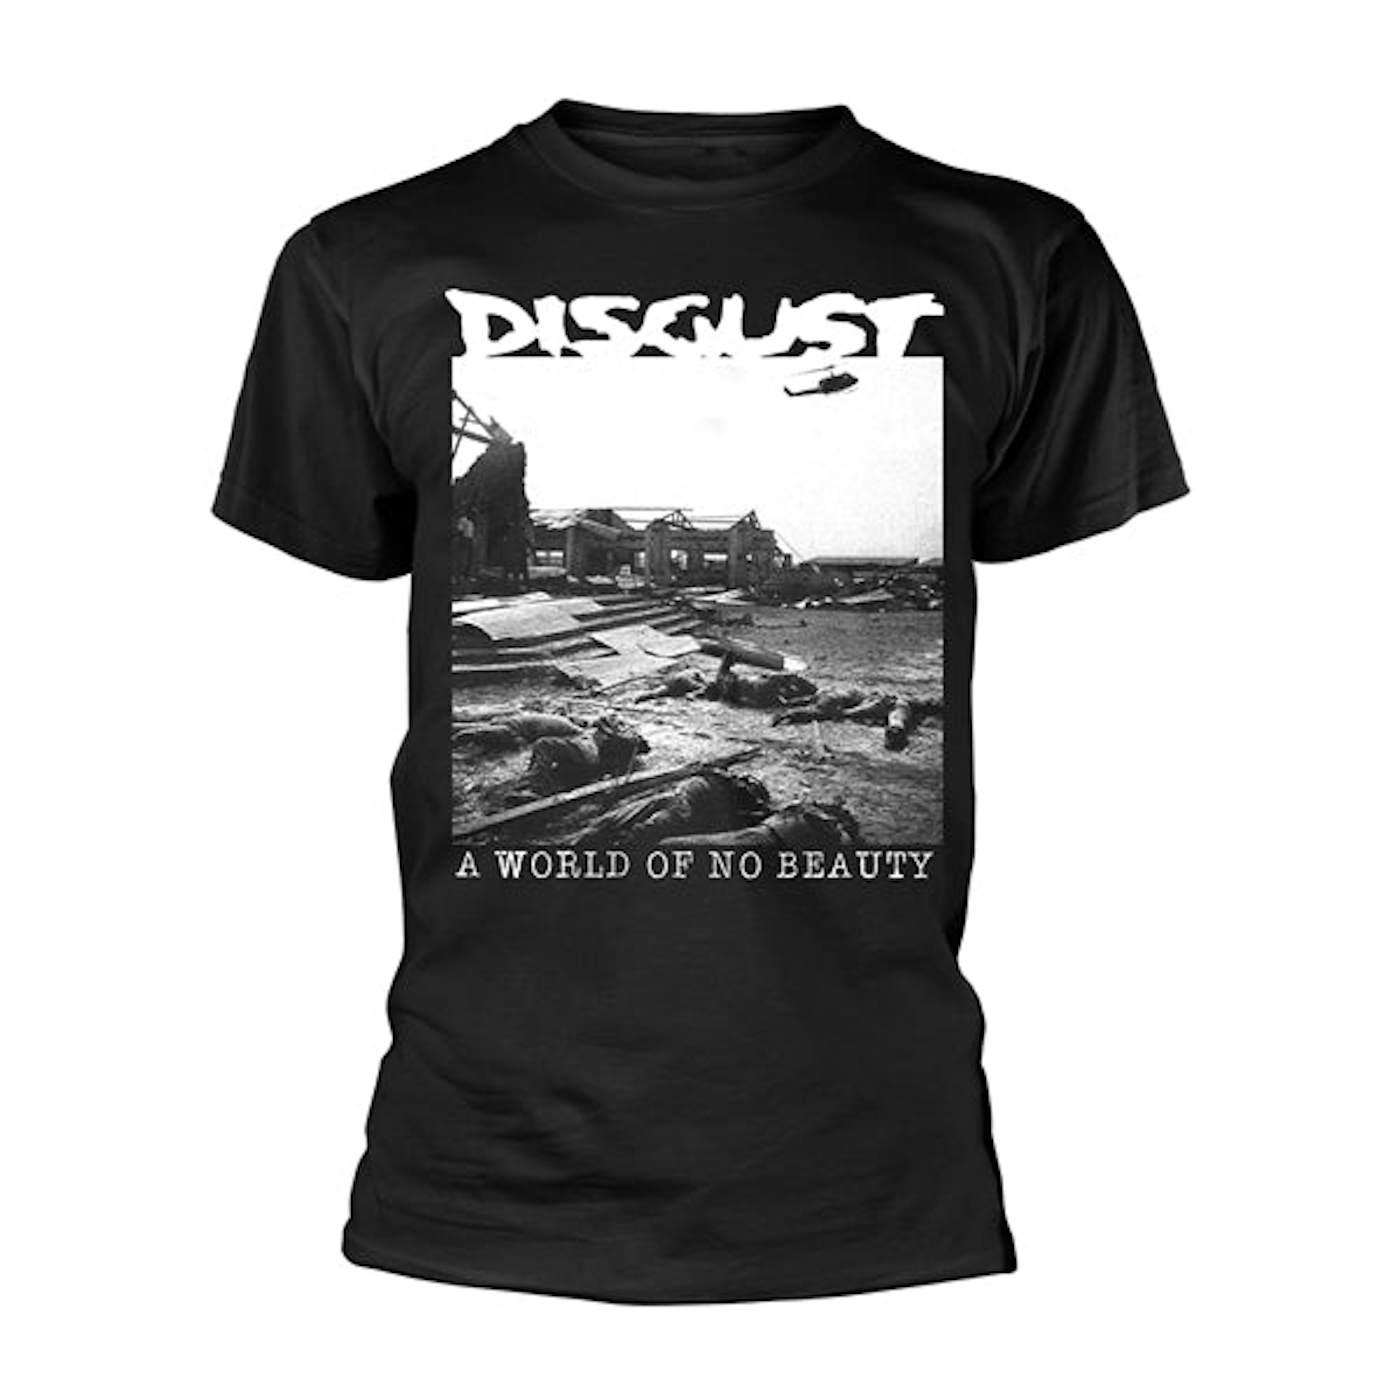 Disgust T-Shirt - A World Of No Beauty